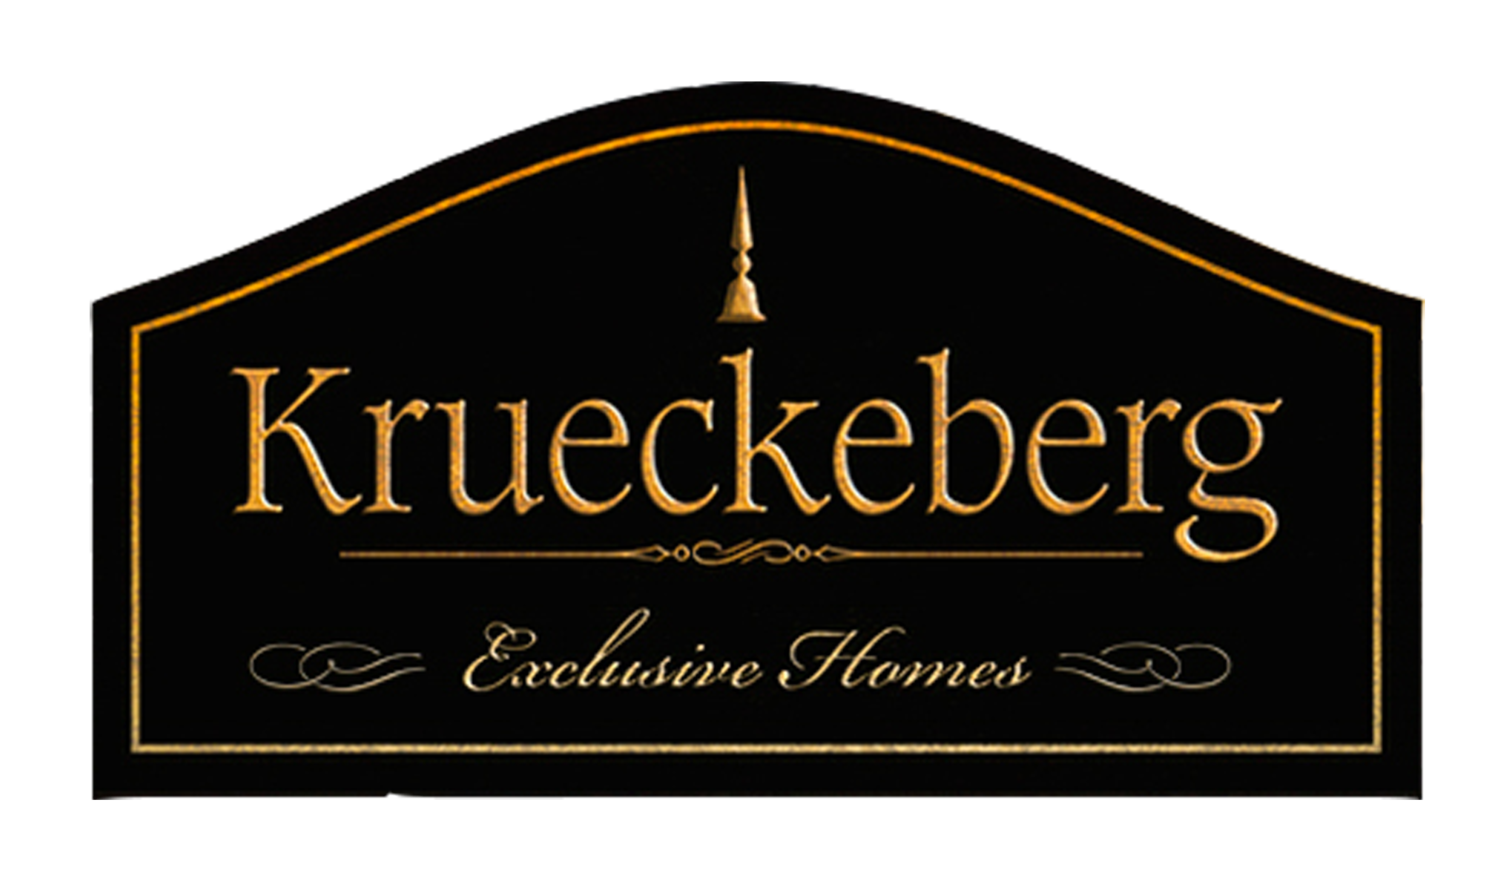 Krueckeberg Exclusive Homes